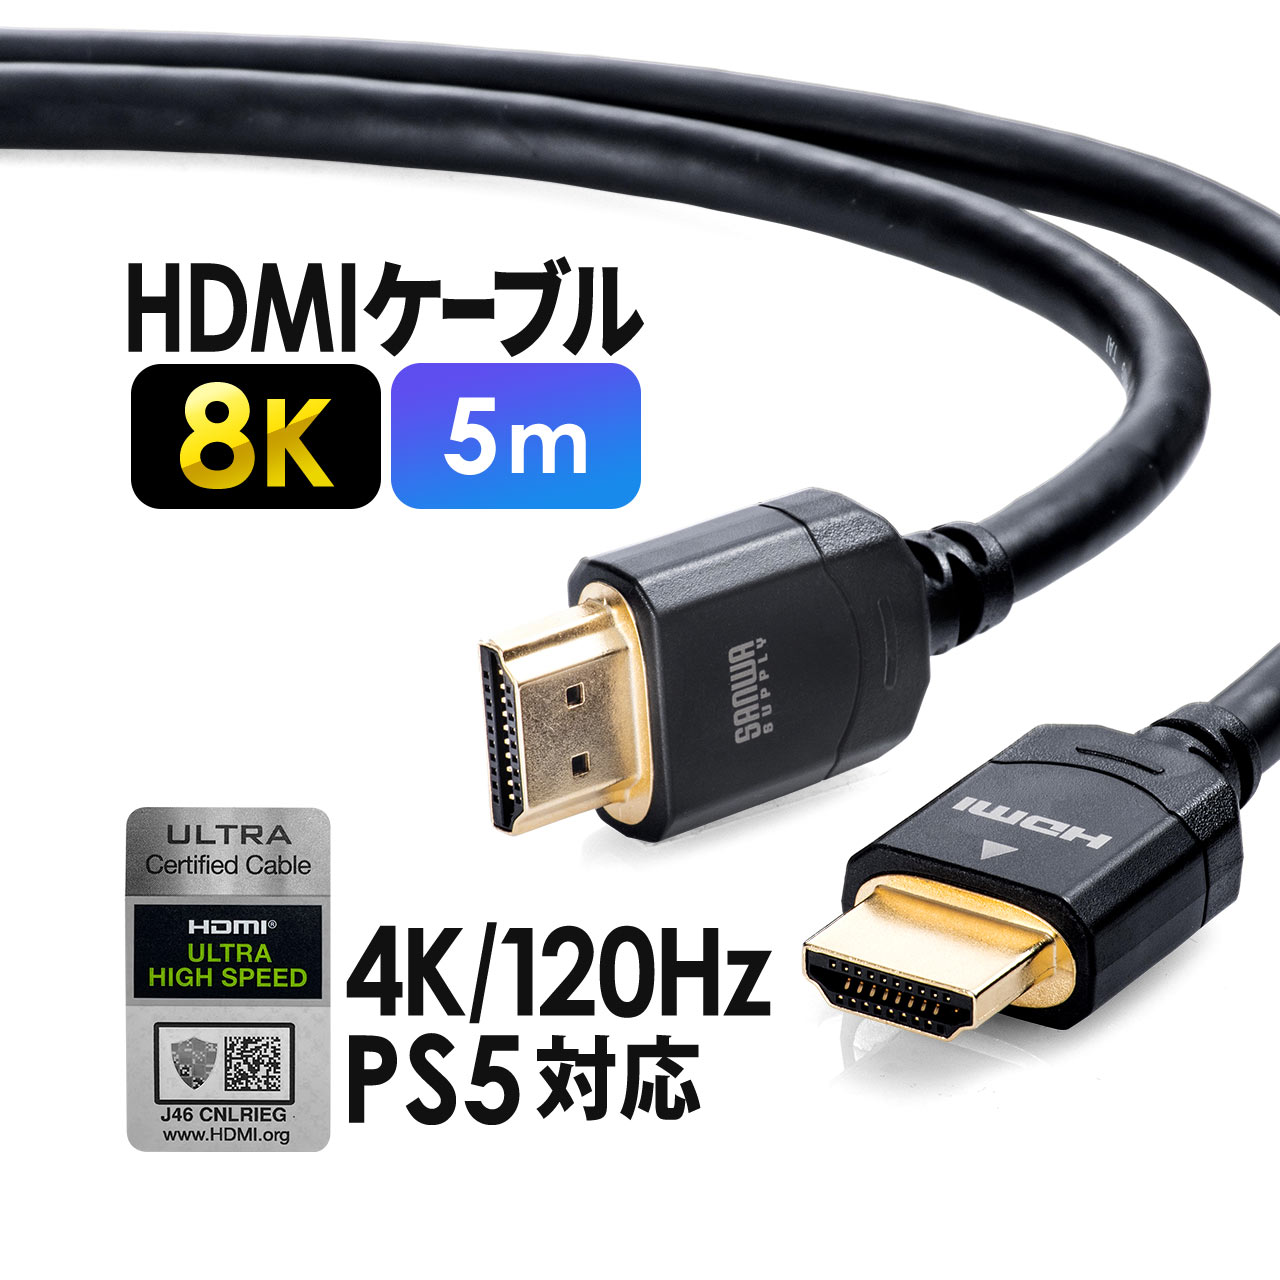 500-HD024-50 タイムセール サンワダイレクト限定品 送料無料 HDMIケーブル 5m 8K PS5 対応 120Hz 48Gbps対応 4K UltraHD ギフト